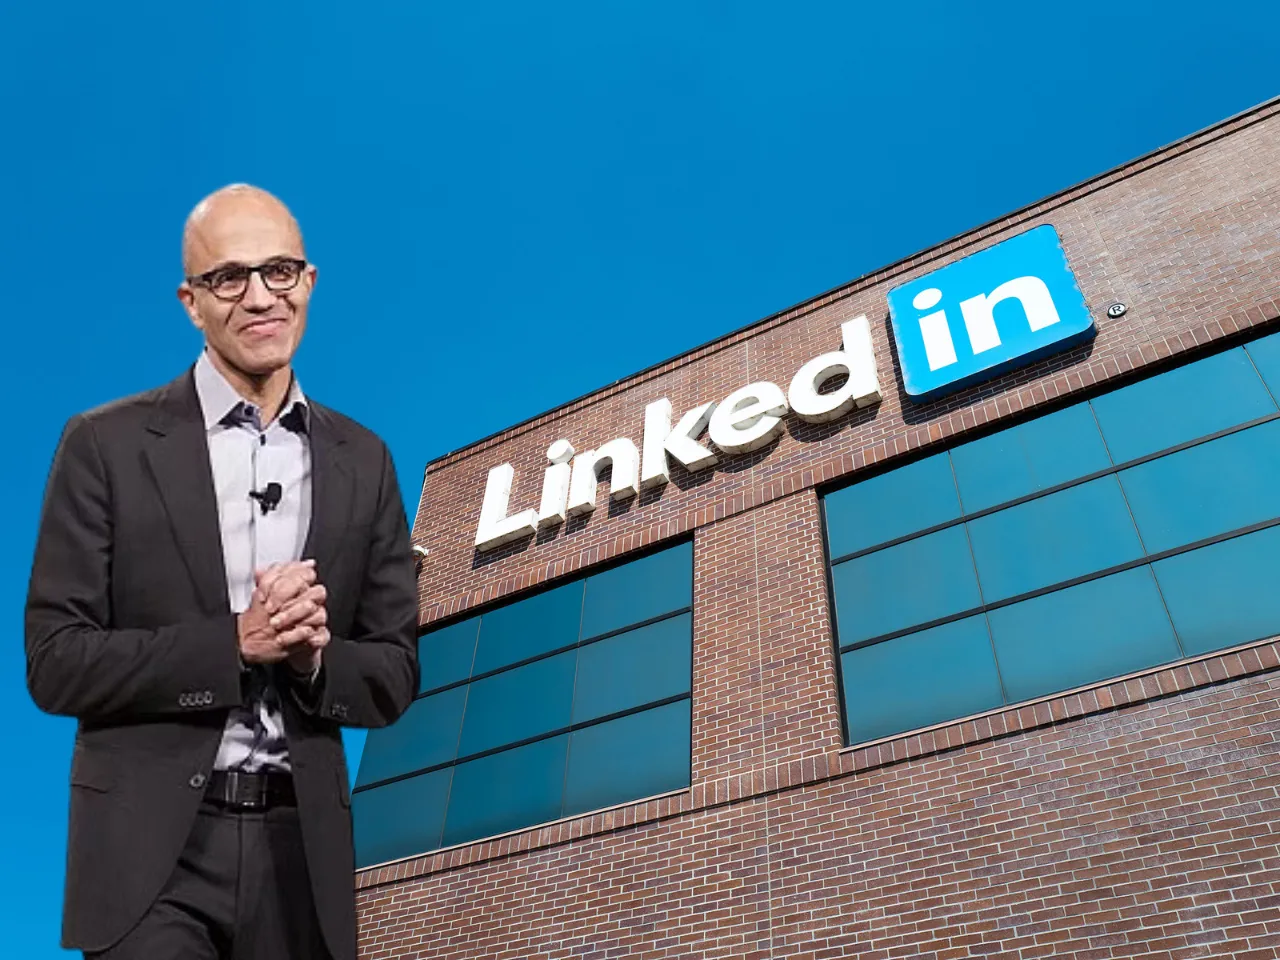 LinkedIn Hits 100 Million Users in India: Microsoft CEO Satya Nadella